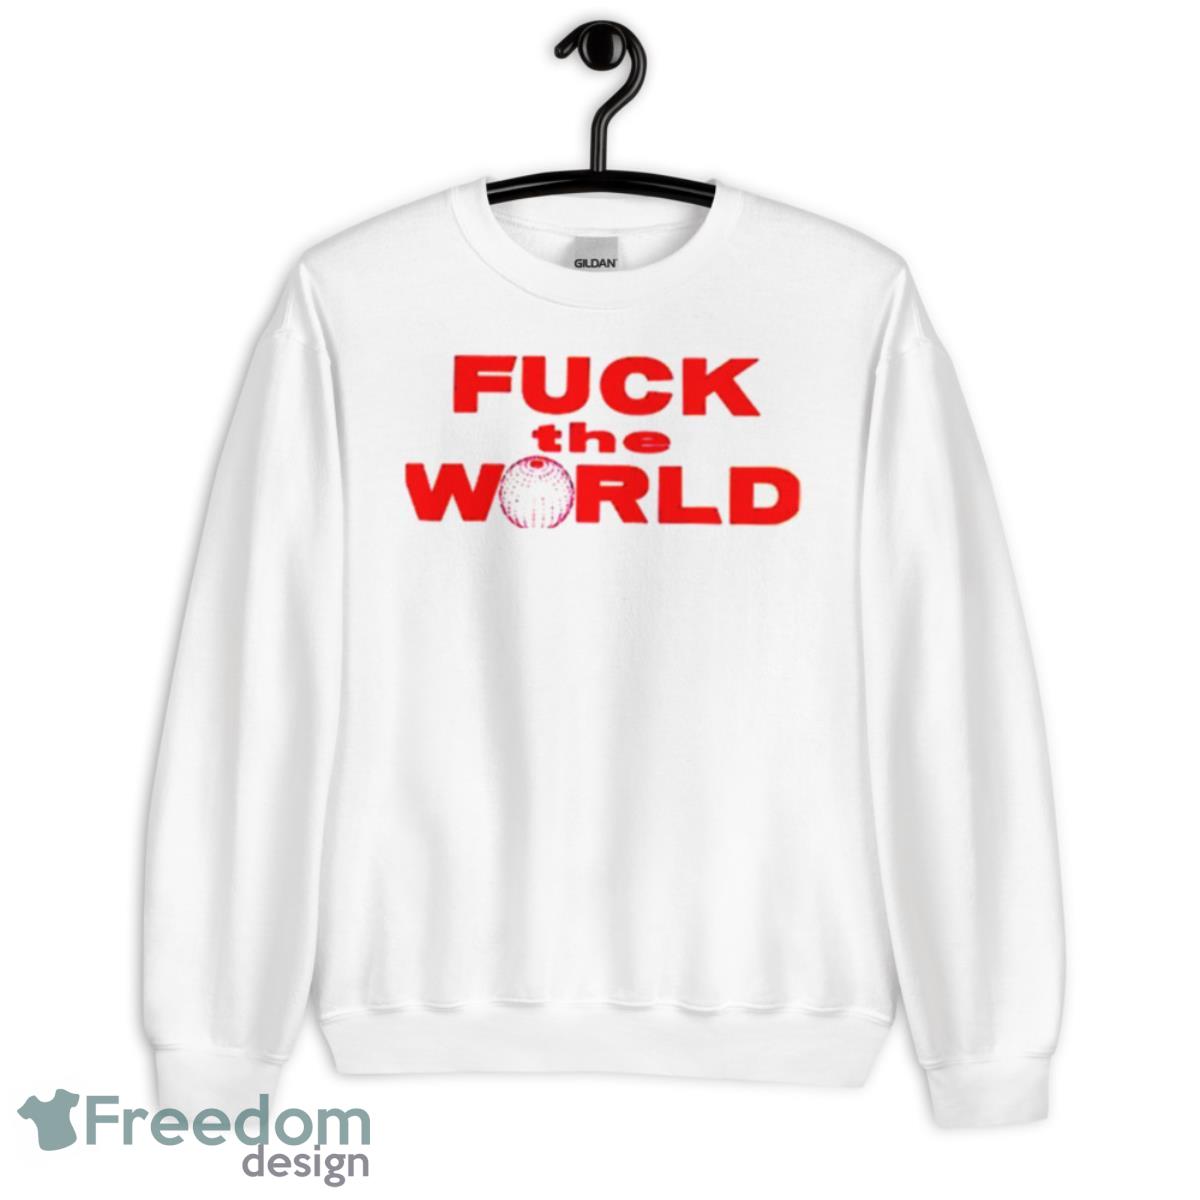 2 Fuck The World Brent Faiyaz shirt - Unisex Heavy Blend Crewneck Sweatshirt